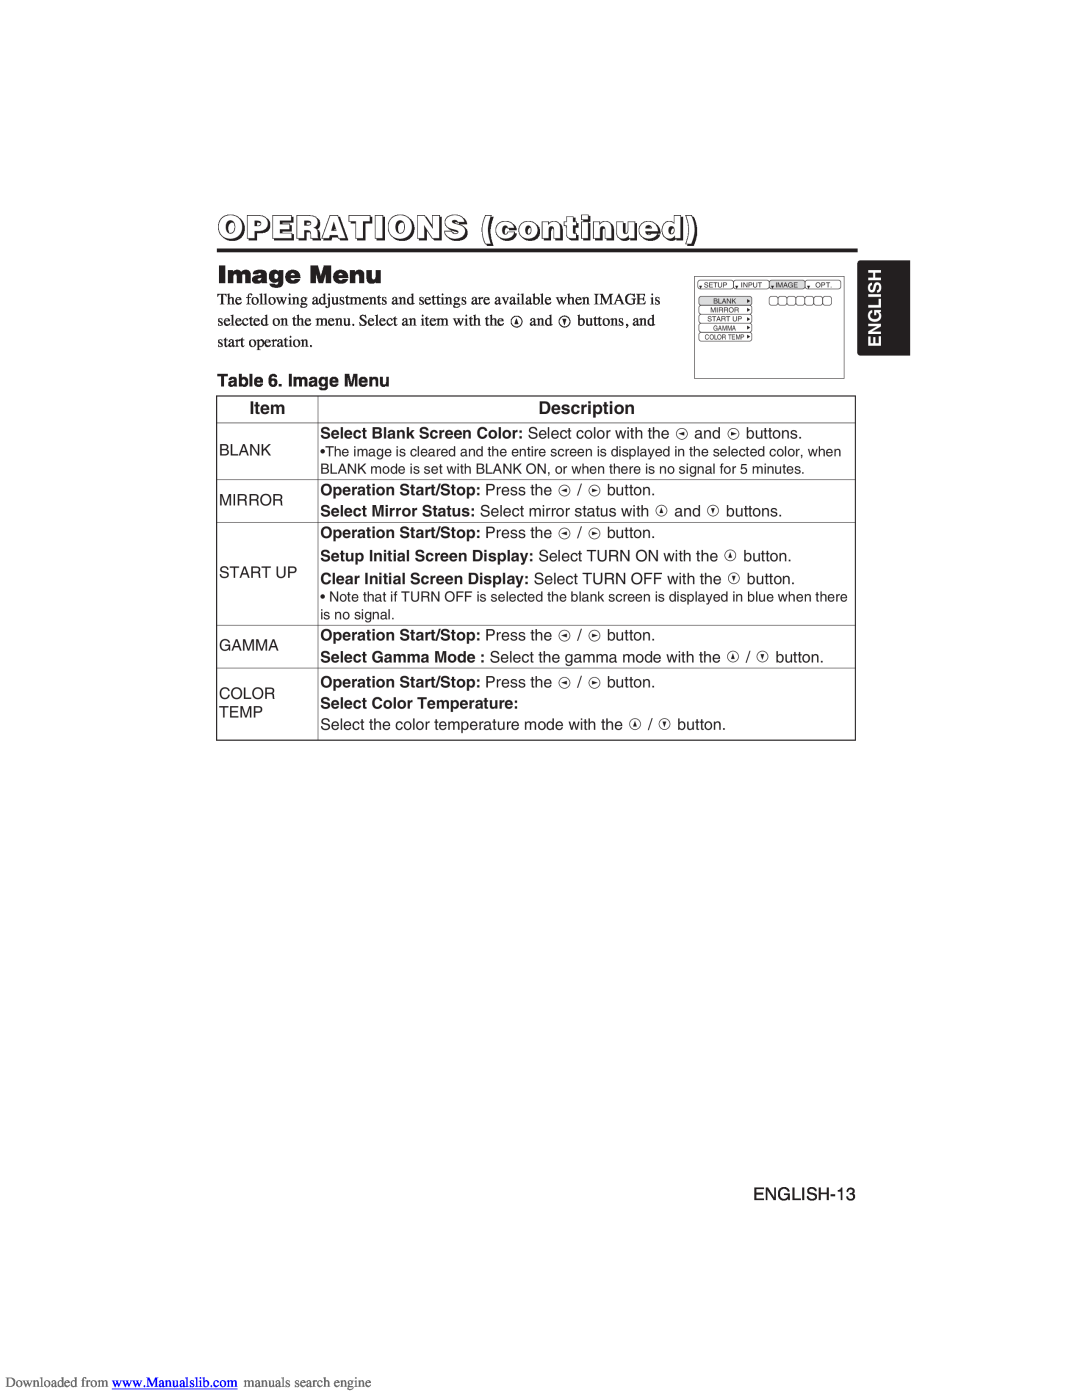 Hitachi CP-X275W user manual Image Menu, OPERATIONS continued, Item, Description, English 